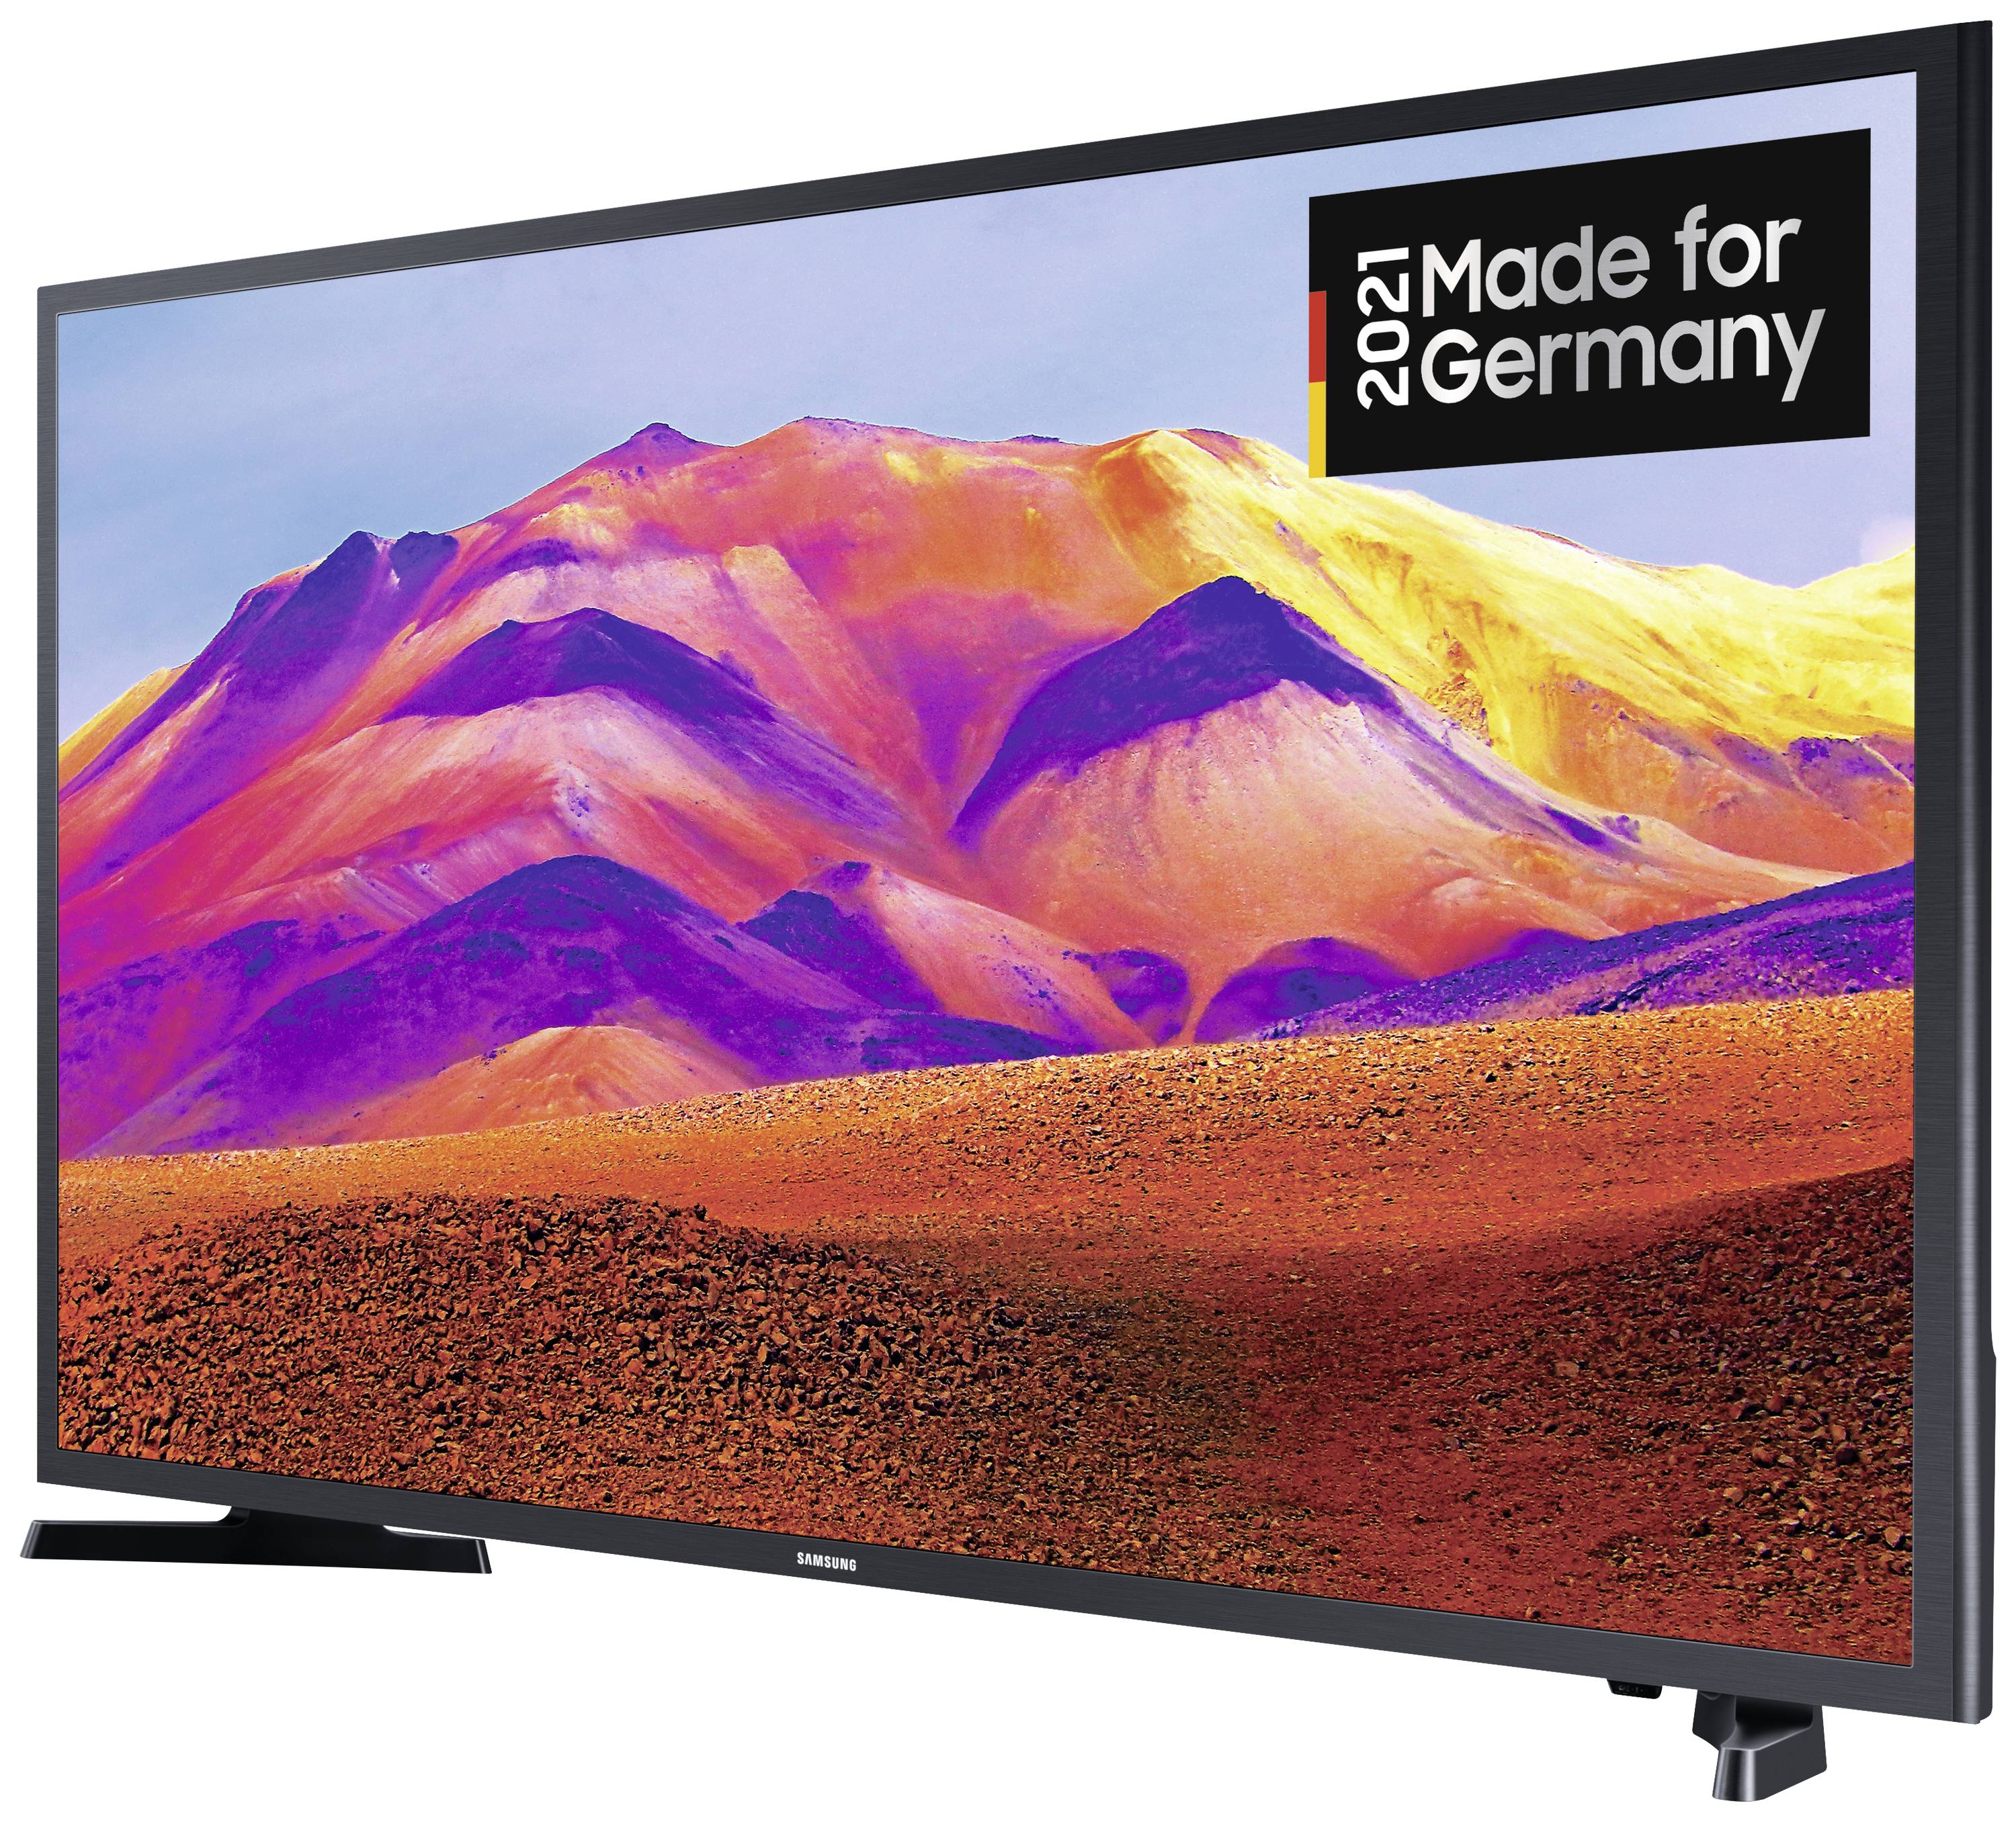 Samsung GU32T5379 LED-fjernsyn 80 cm 32 tommer EEK G (A - G) DVB-T2 HD , DVB-C, Full HD, Smart TV, WLAN, CI+ Sort | Conradelektronik.dk